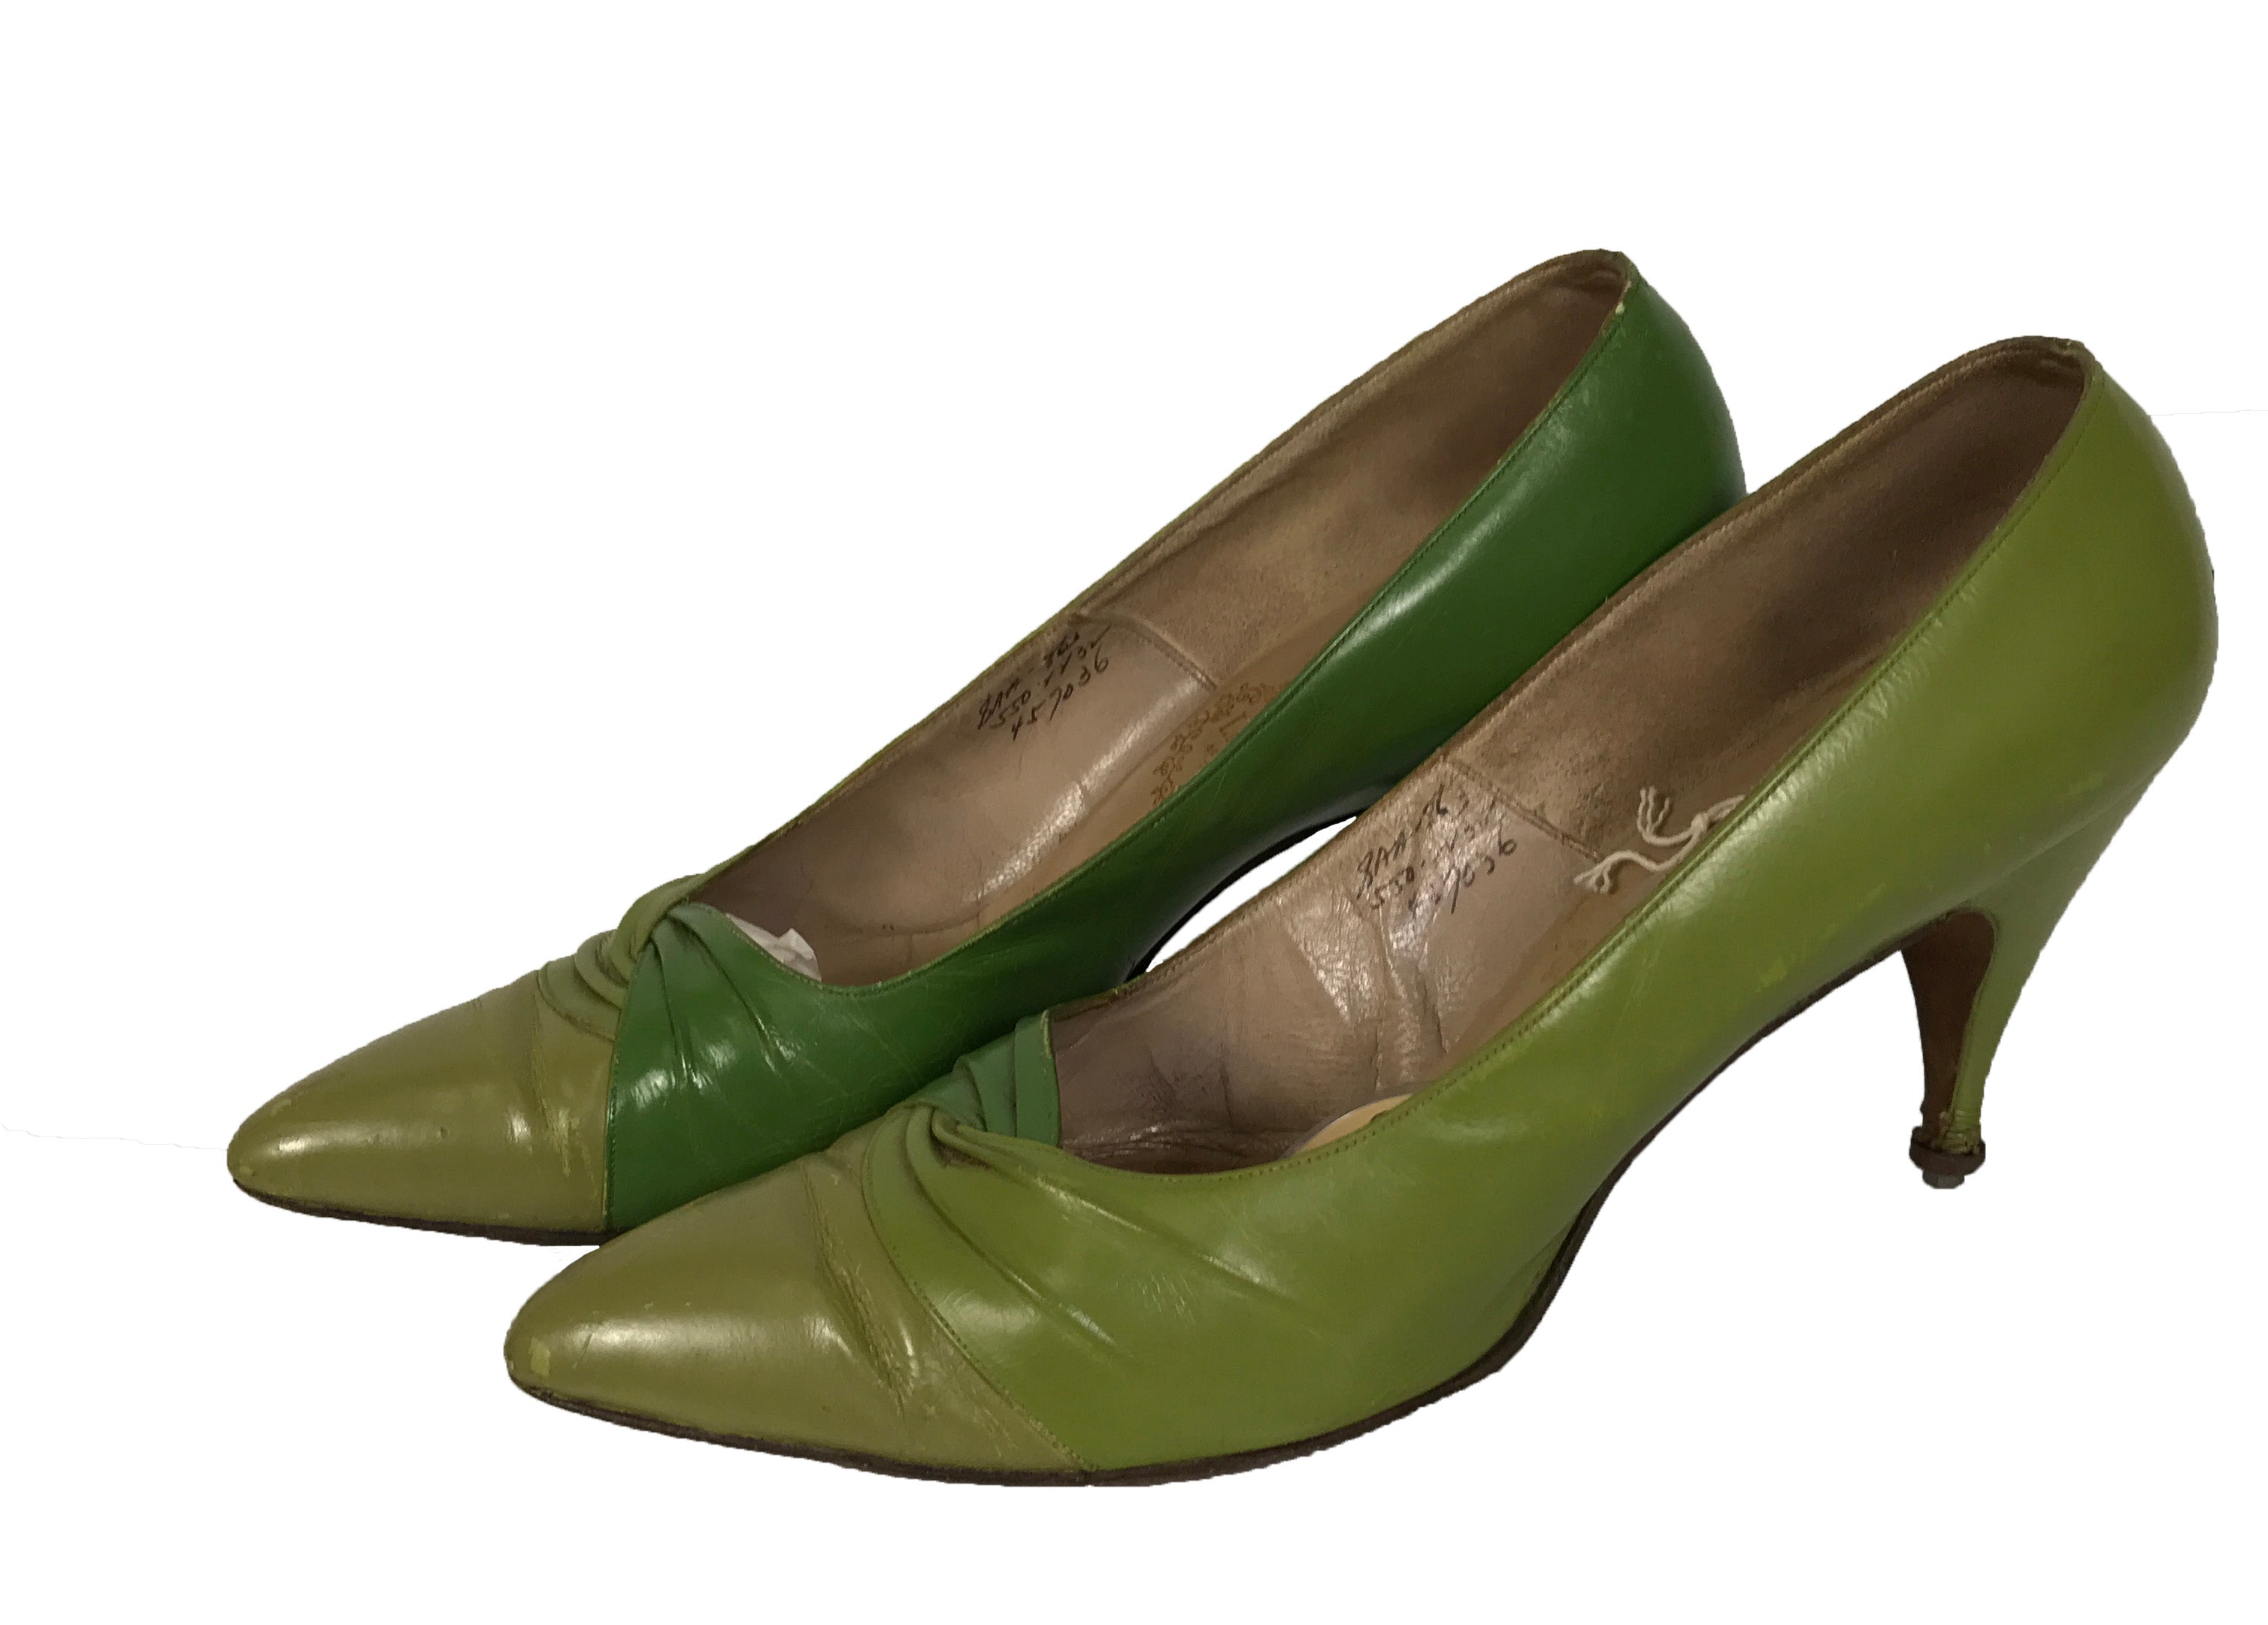 Vintage 50's Green I Miller Heels Women's Size 7.5